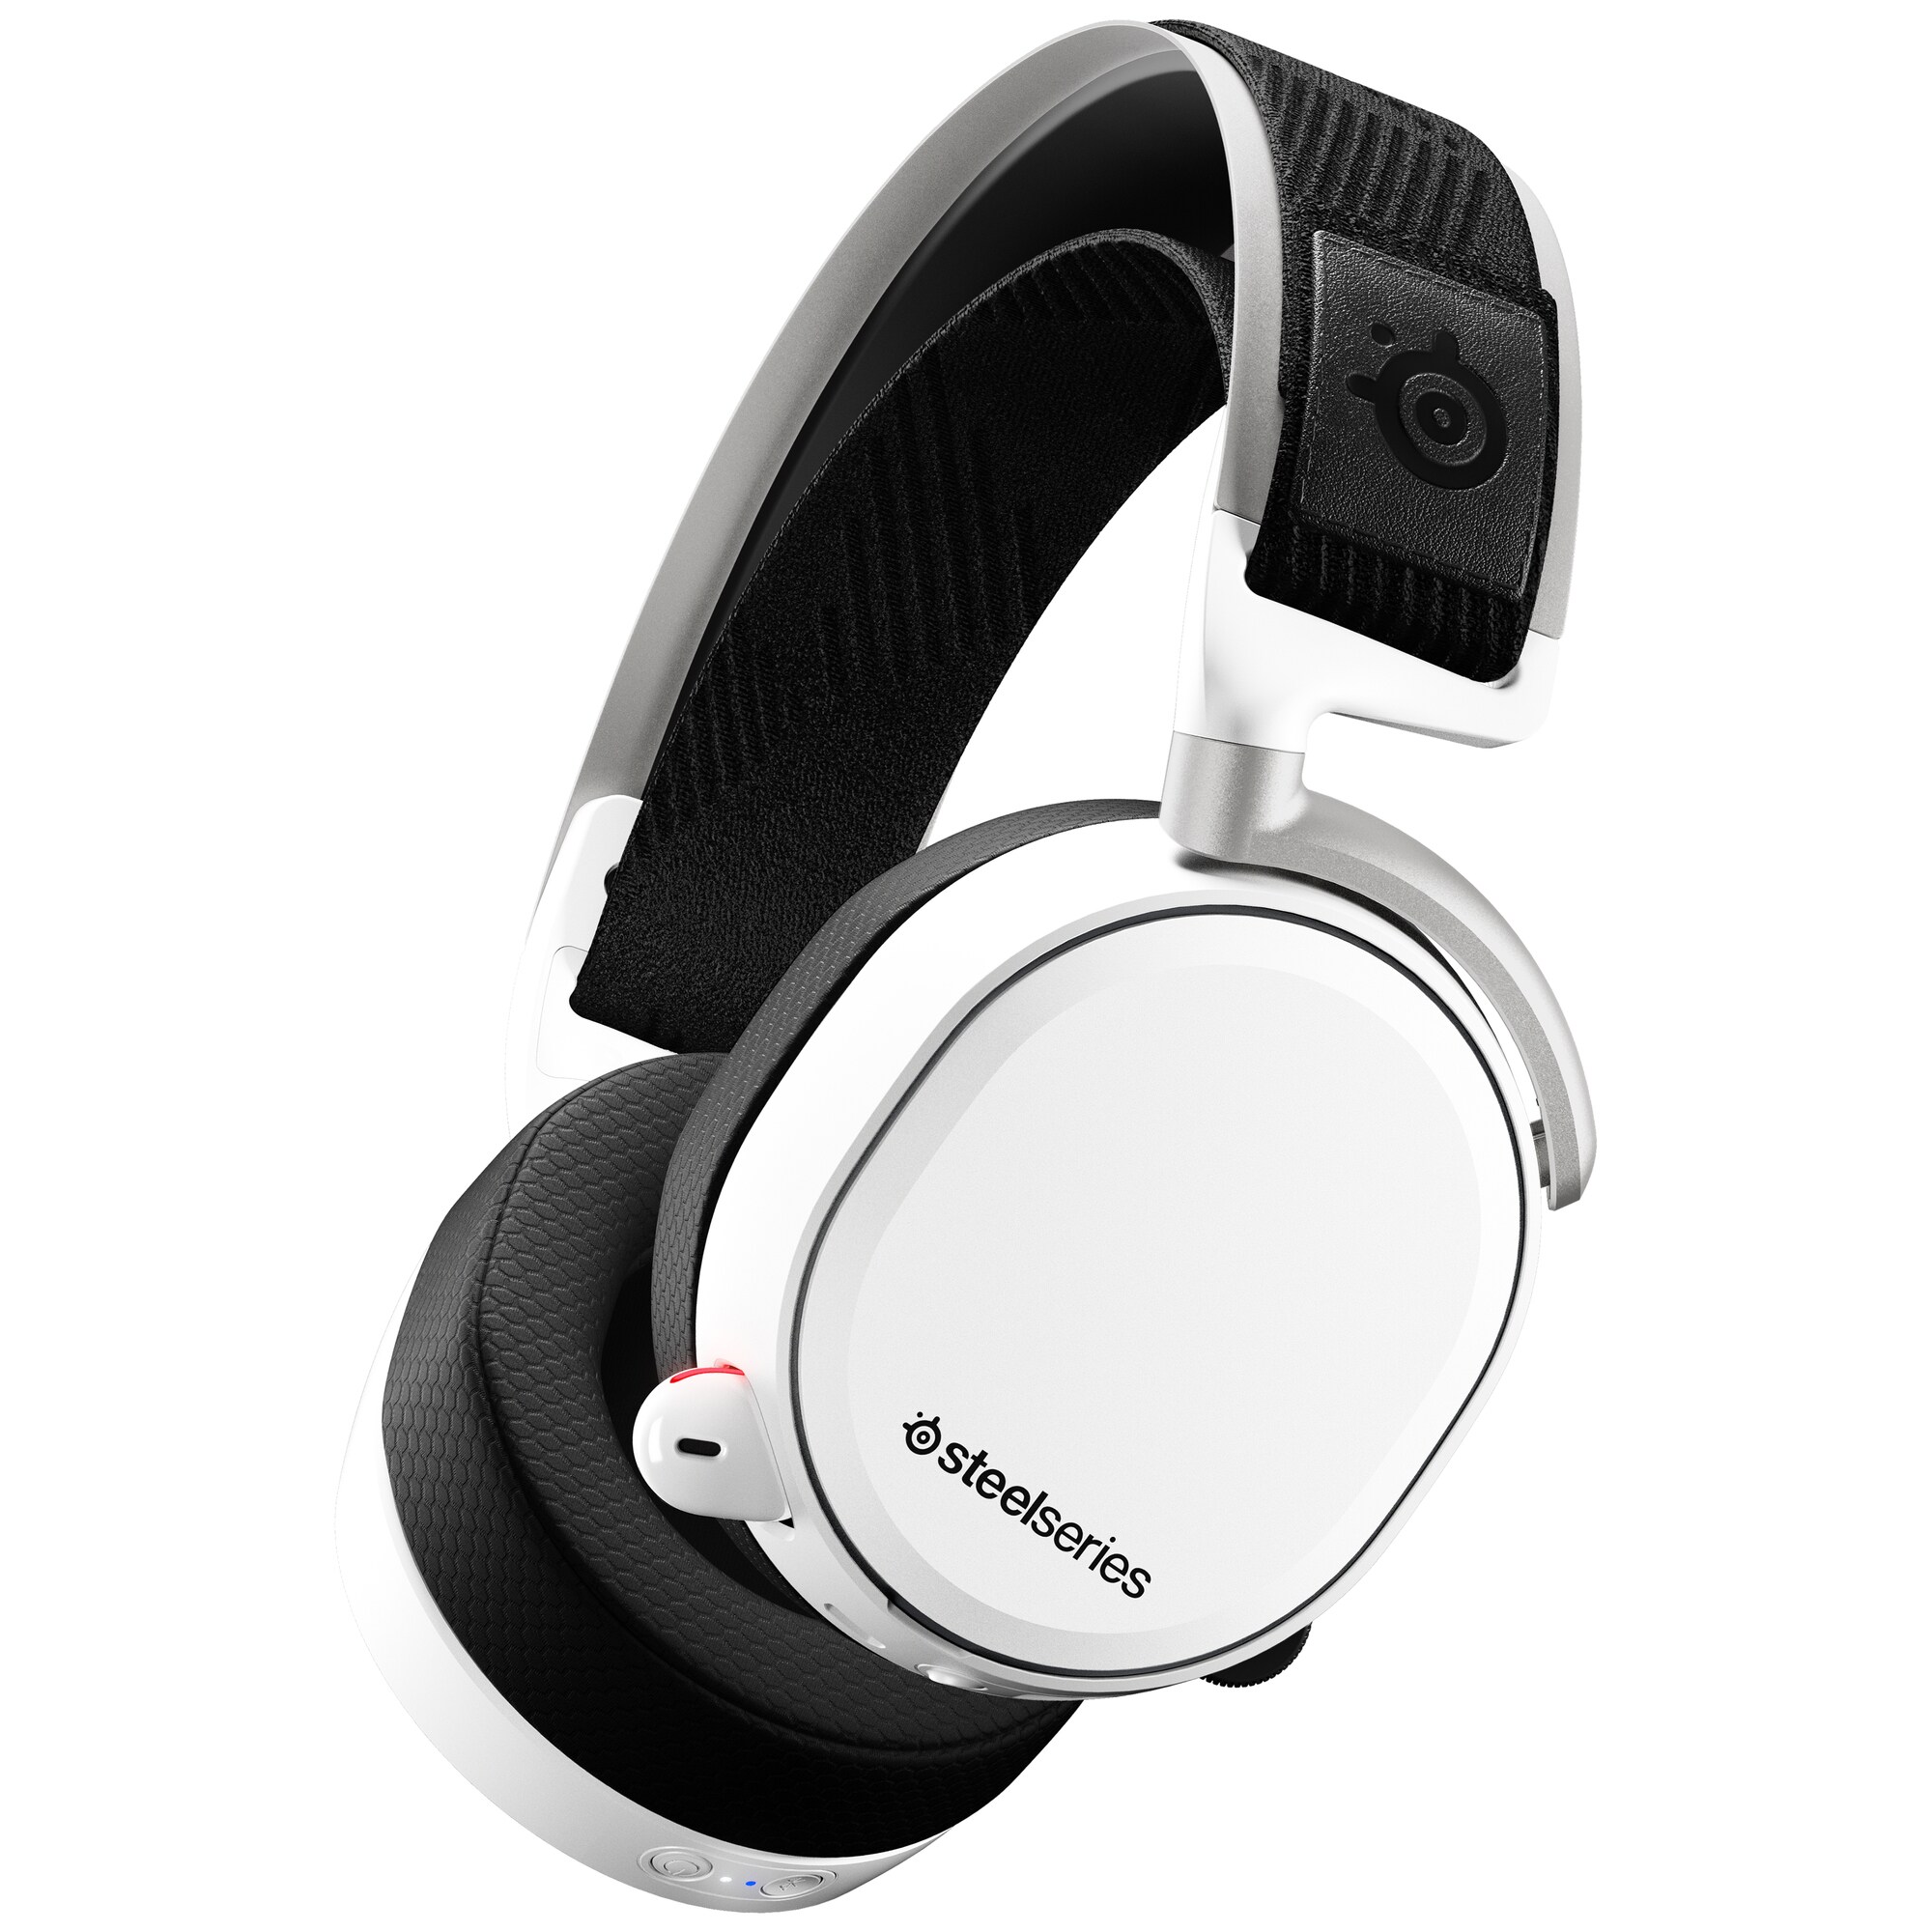 SteelSeries Arctis Pro trådlöst gaming headset (vit) - Elgiganten